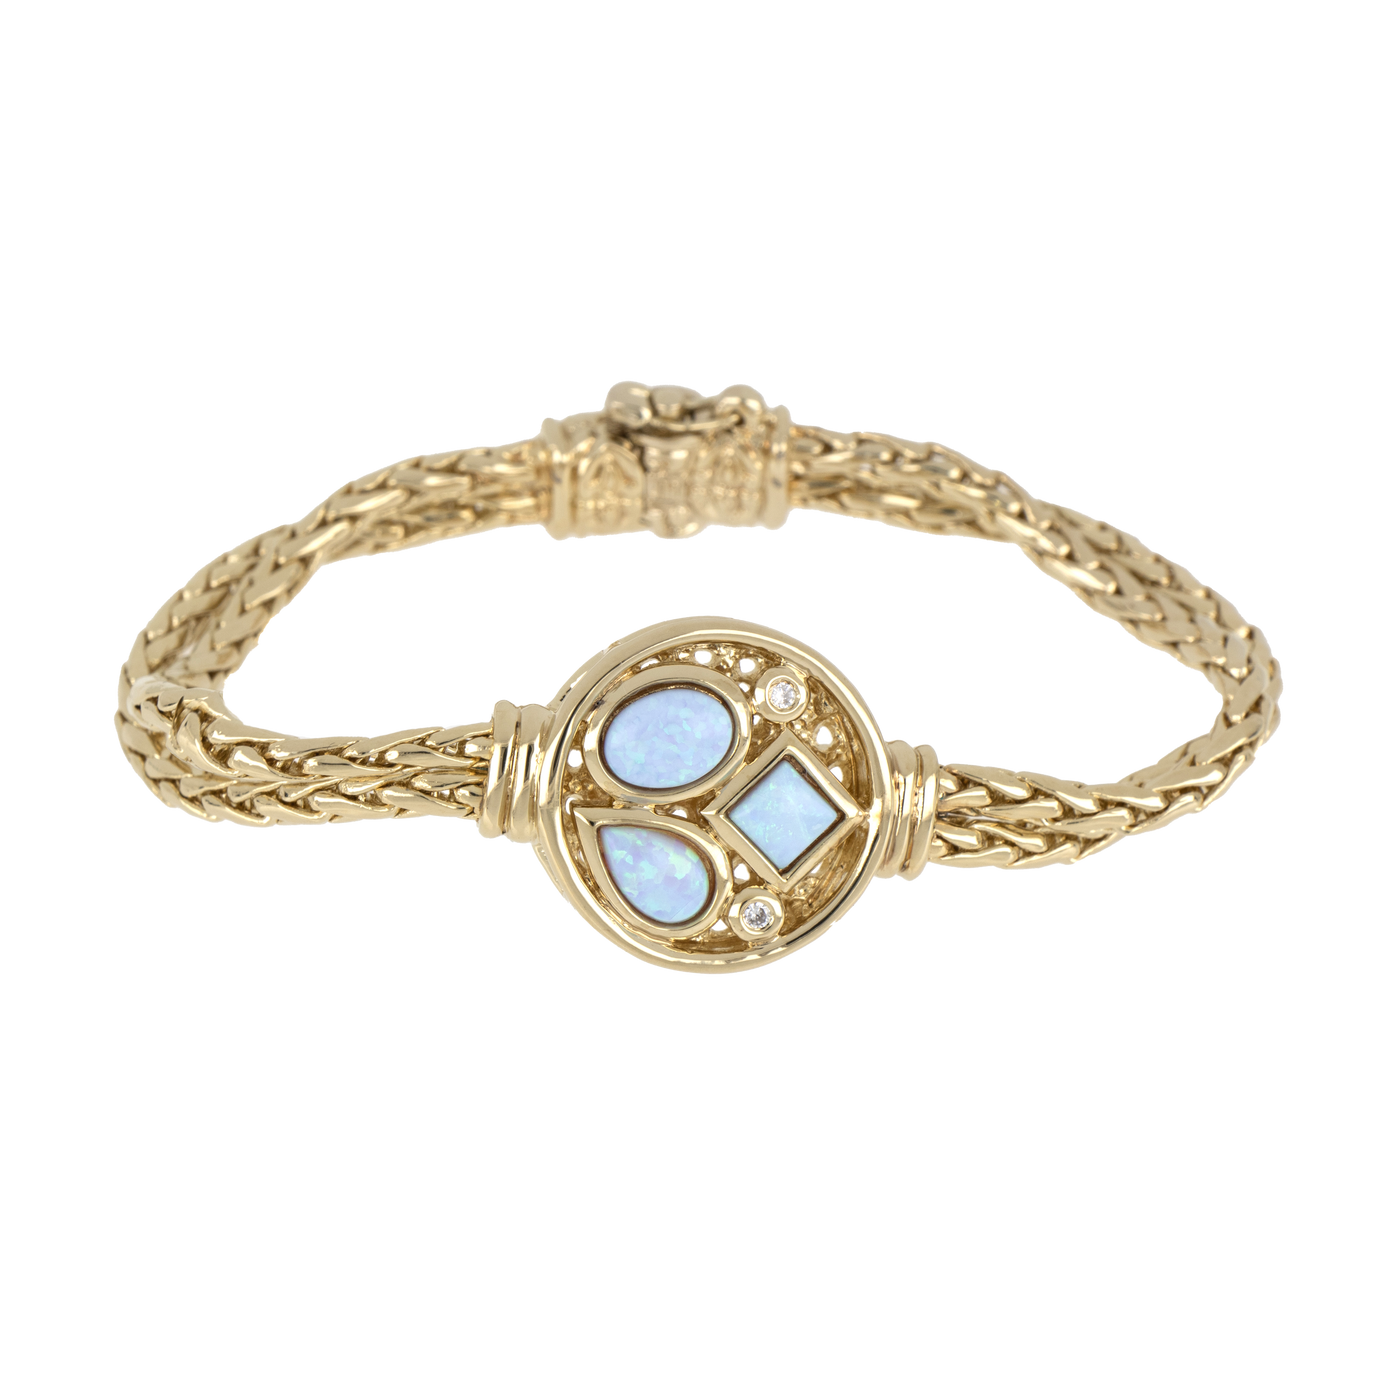 Opalas do Mar Collection - Double Strand 3 Blue Opal CZ Bracelet